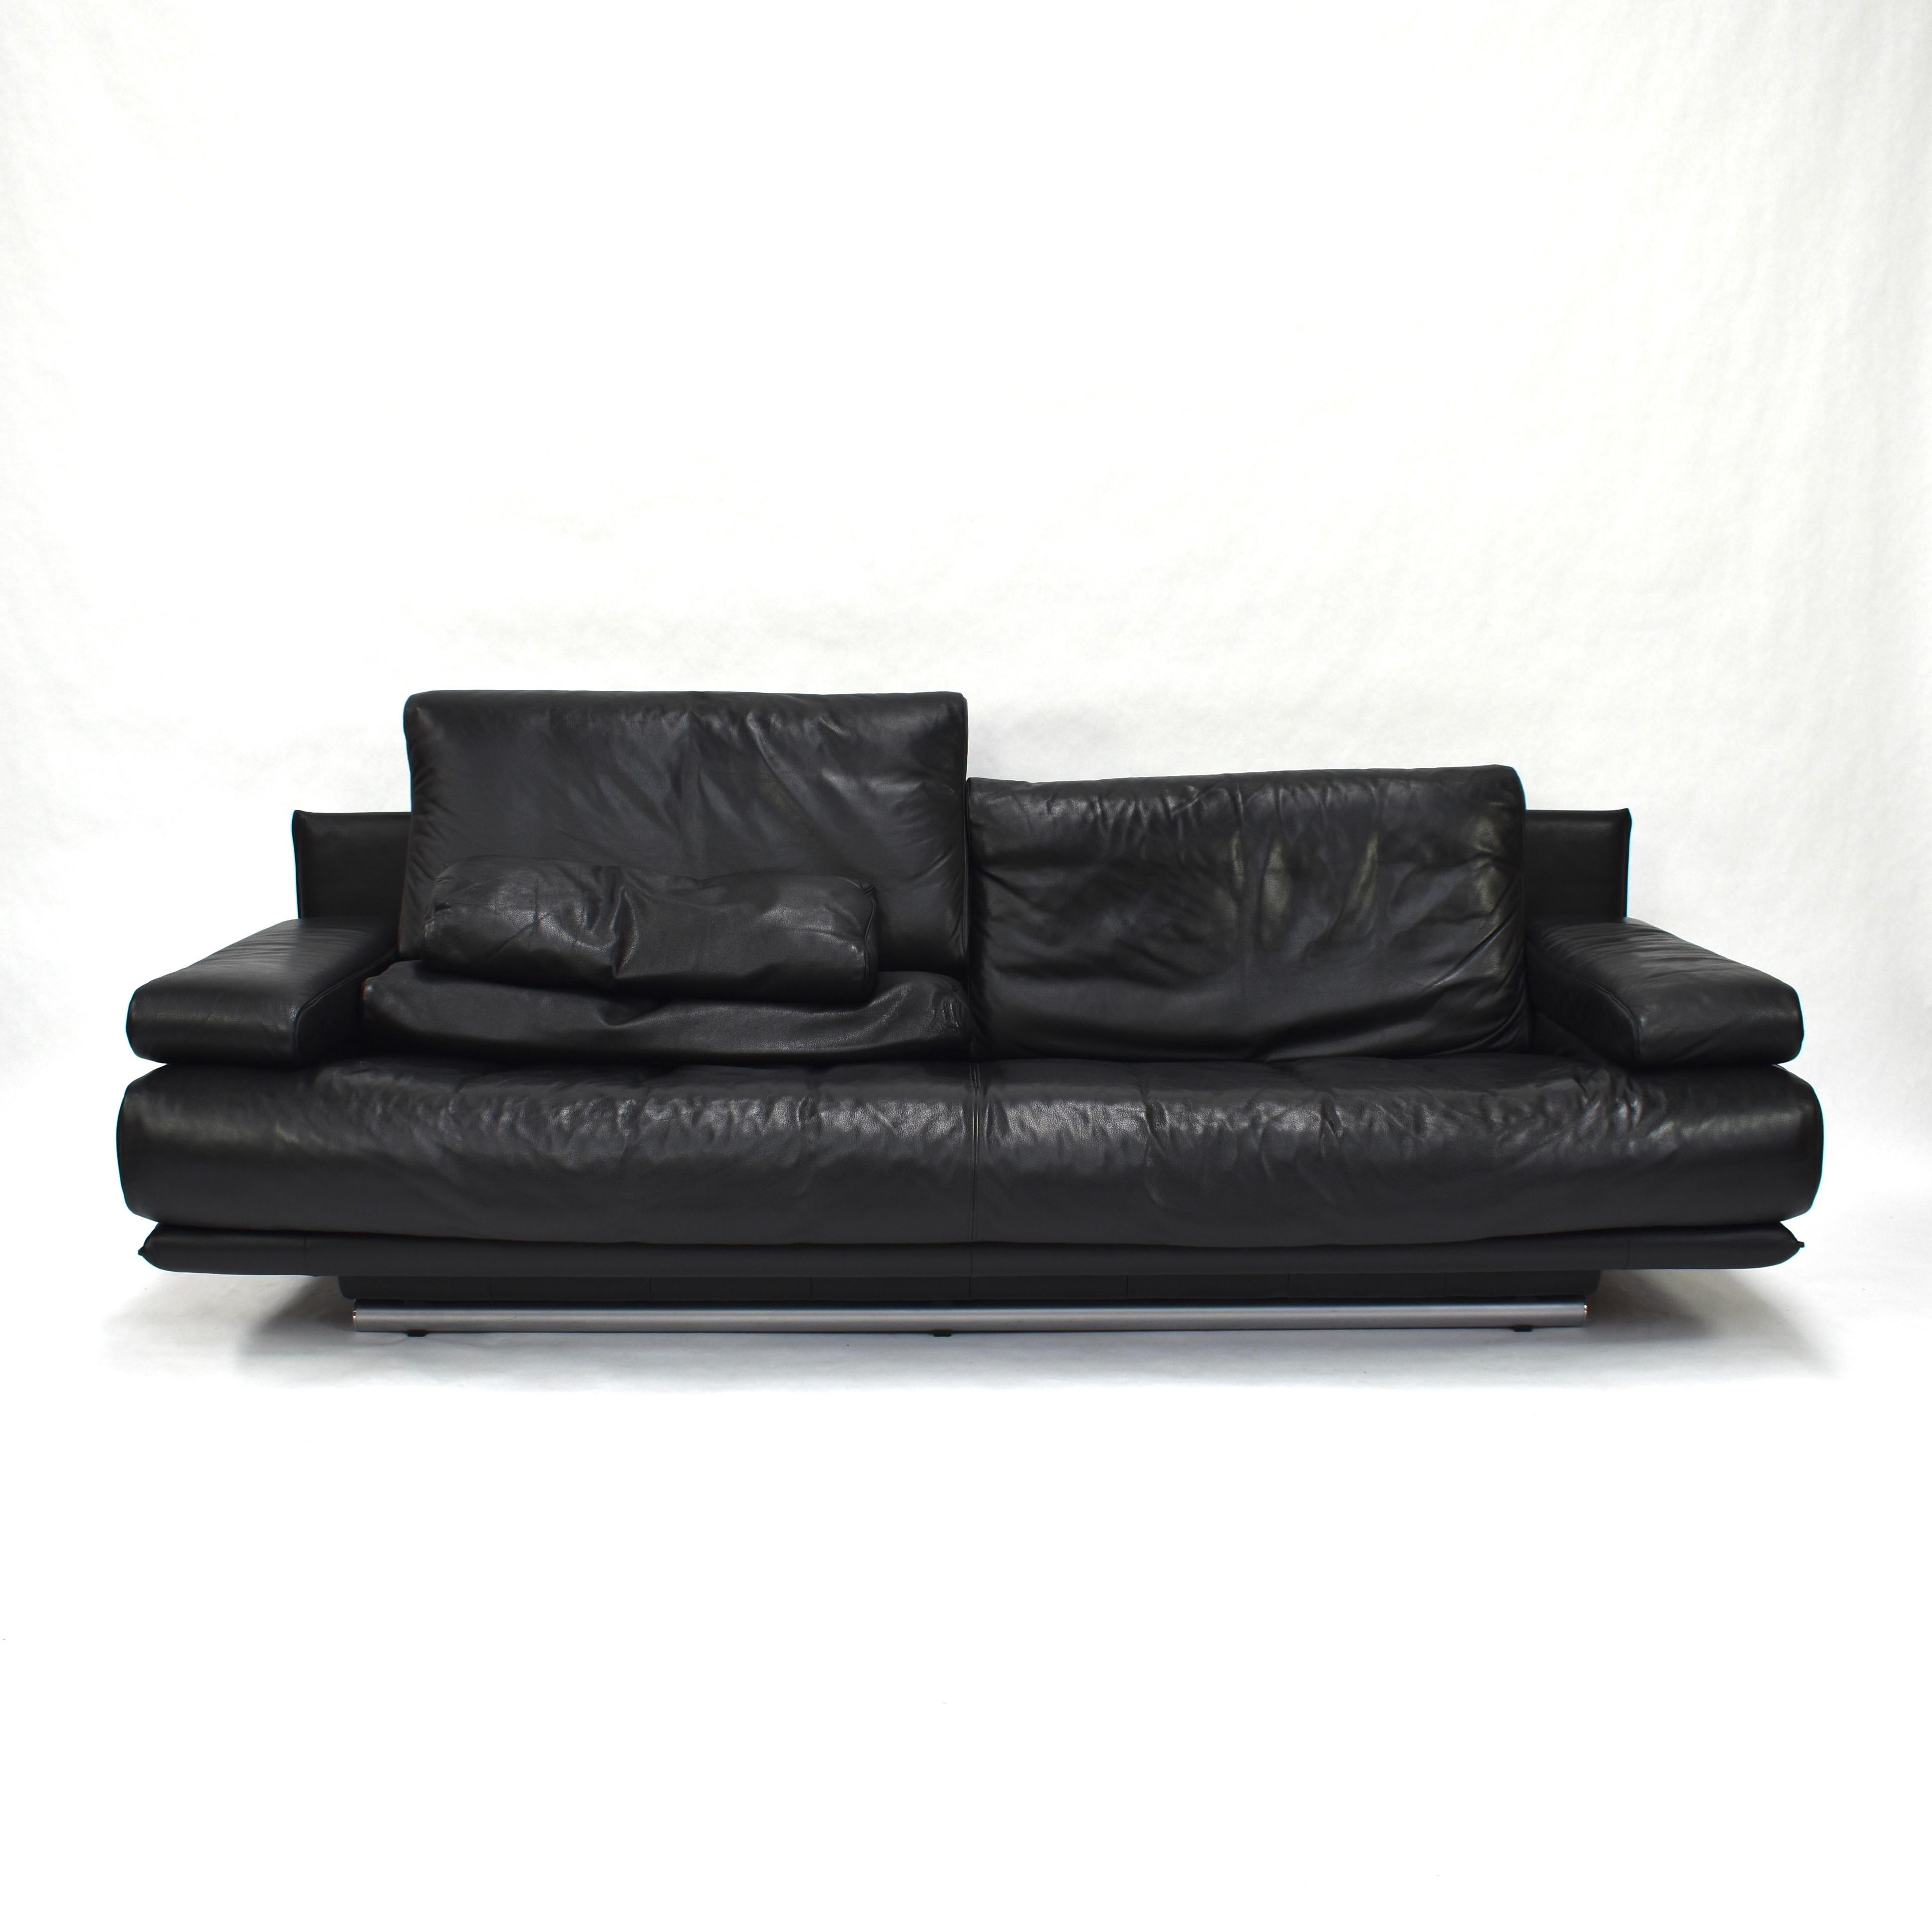 20th Century Rolf Benz Model 6500 Sofa in Black Leather by Mathias Hoffmann